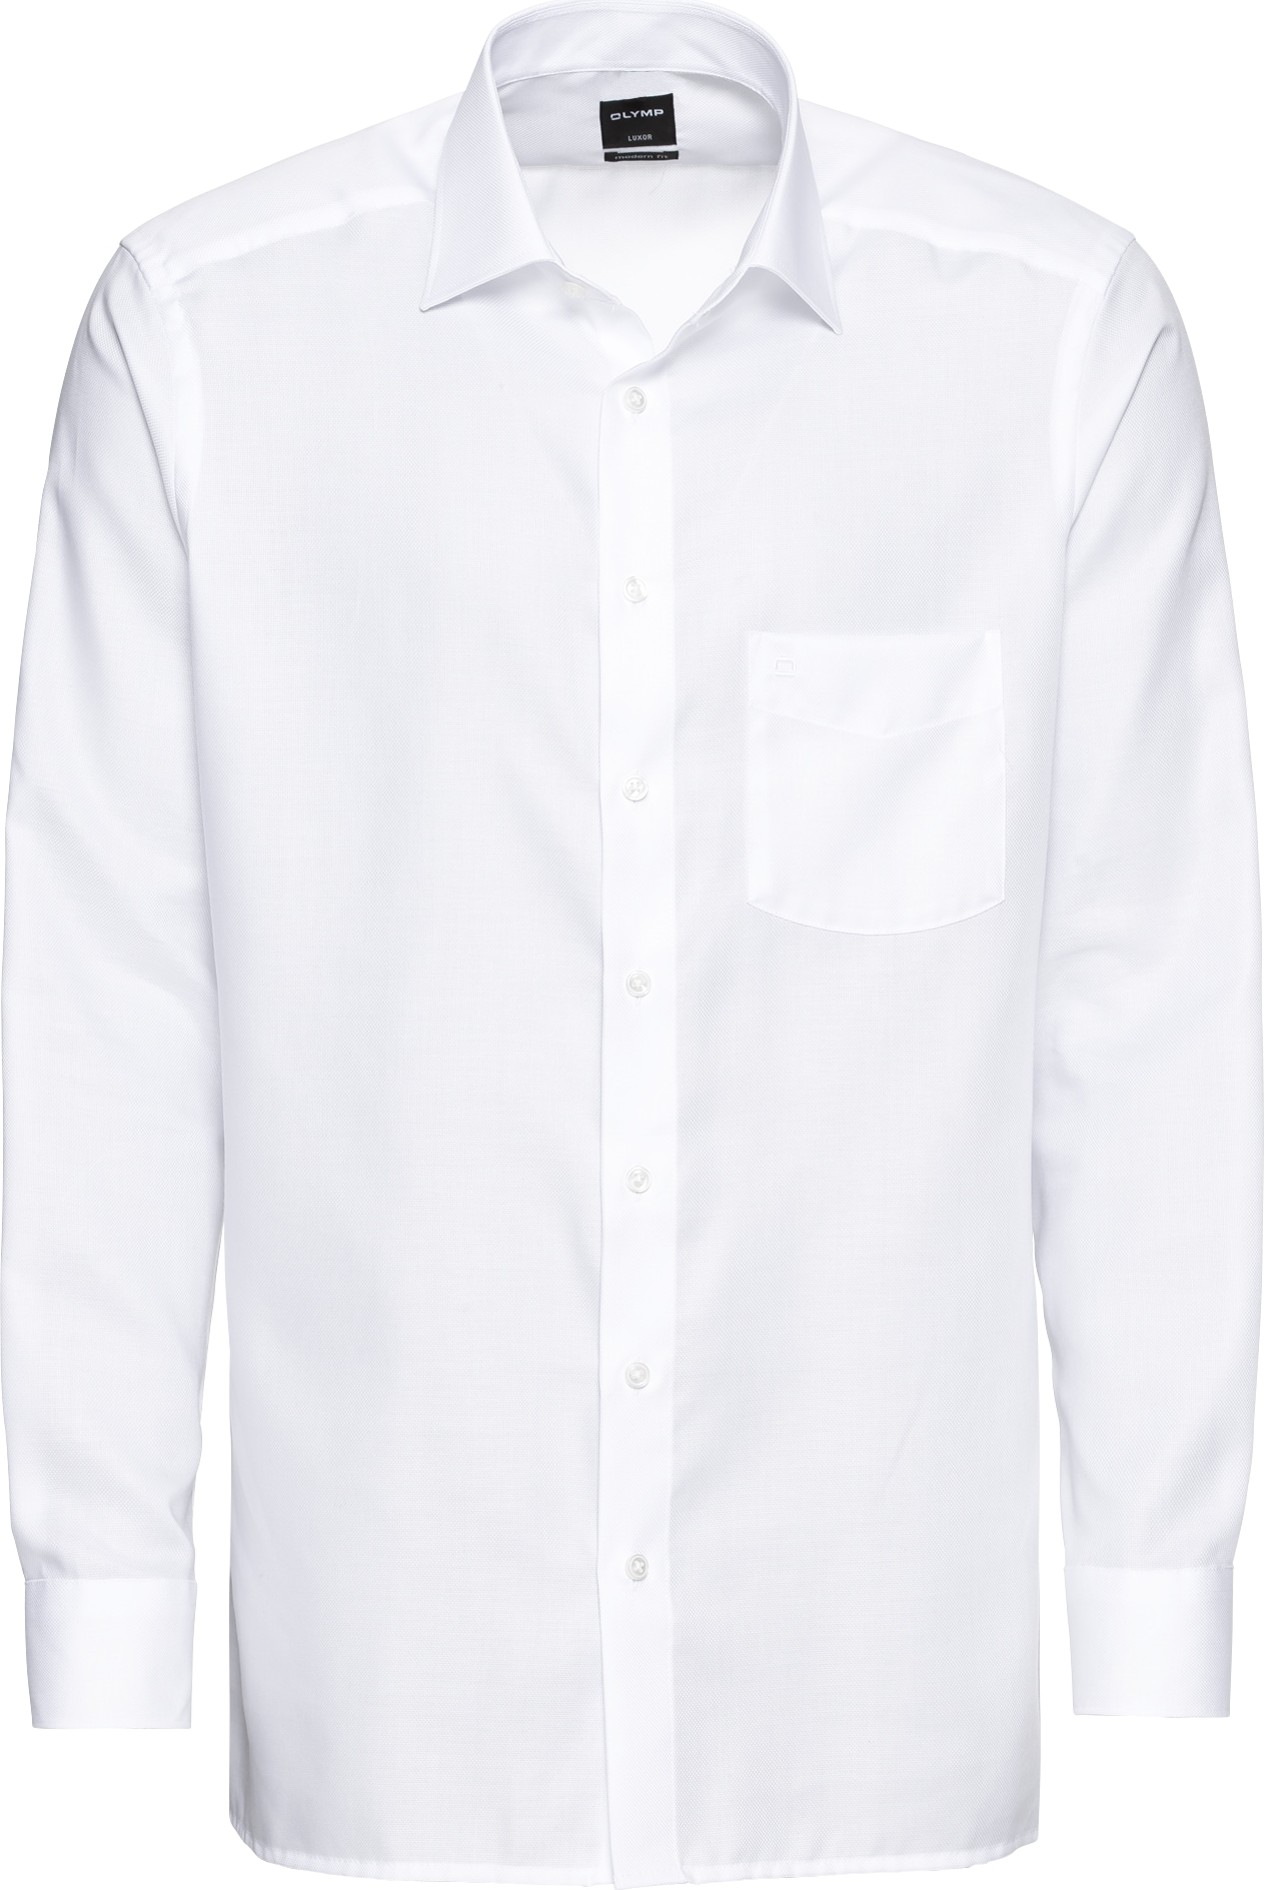 OLYMP Košile 'Luxor Faux' bílá